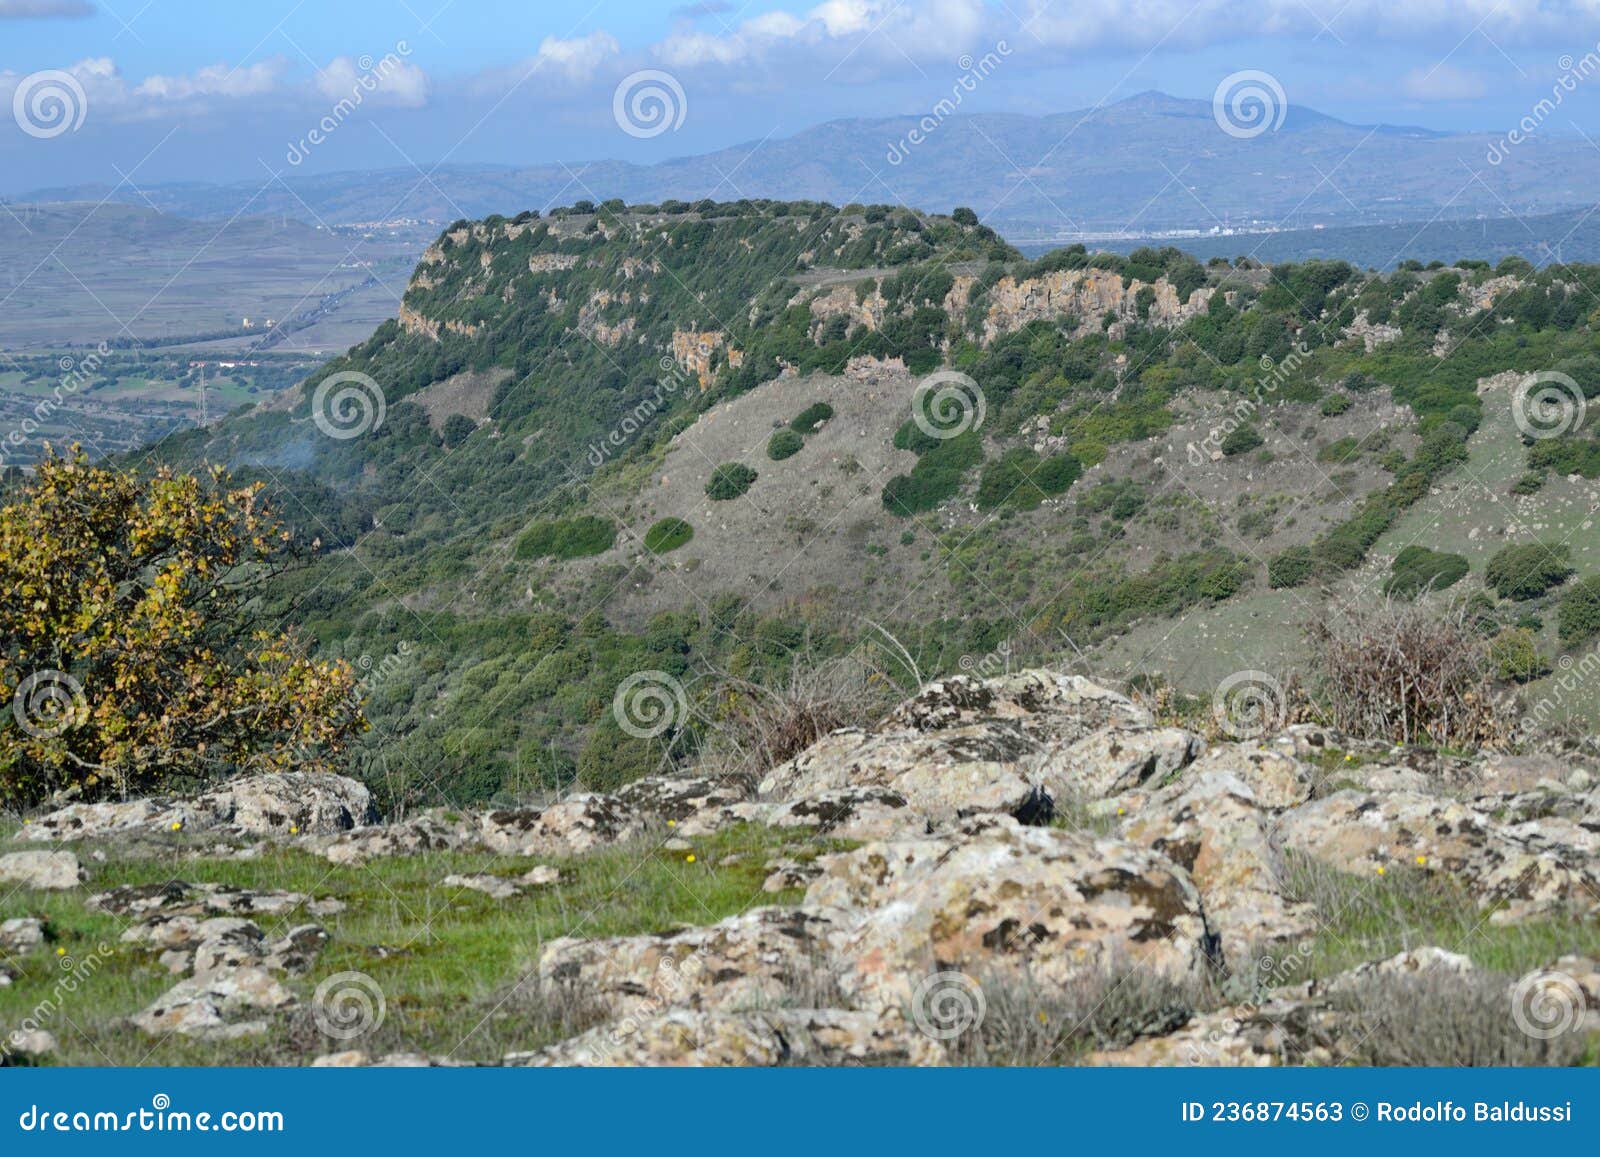 view of monte s. antonio from monte pelao